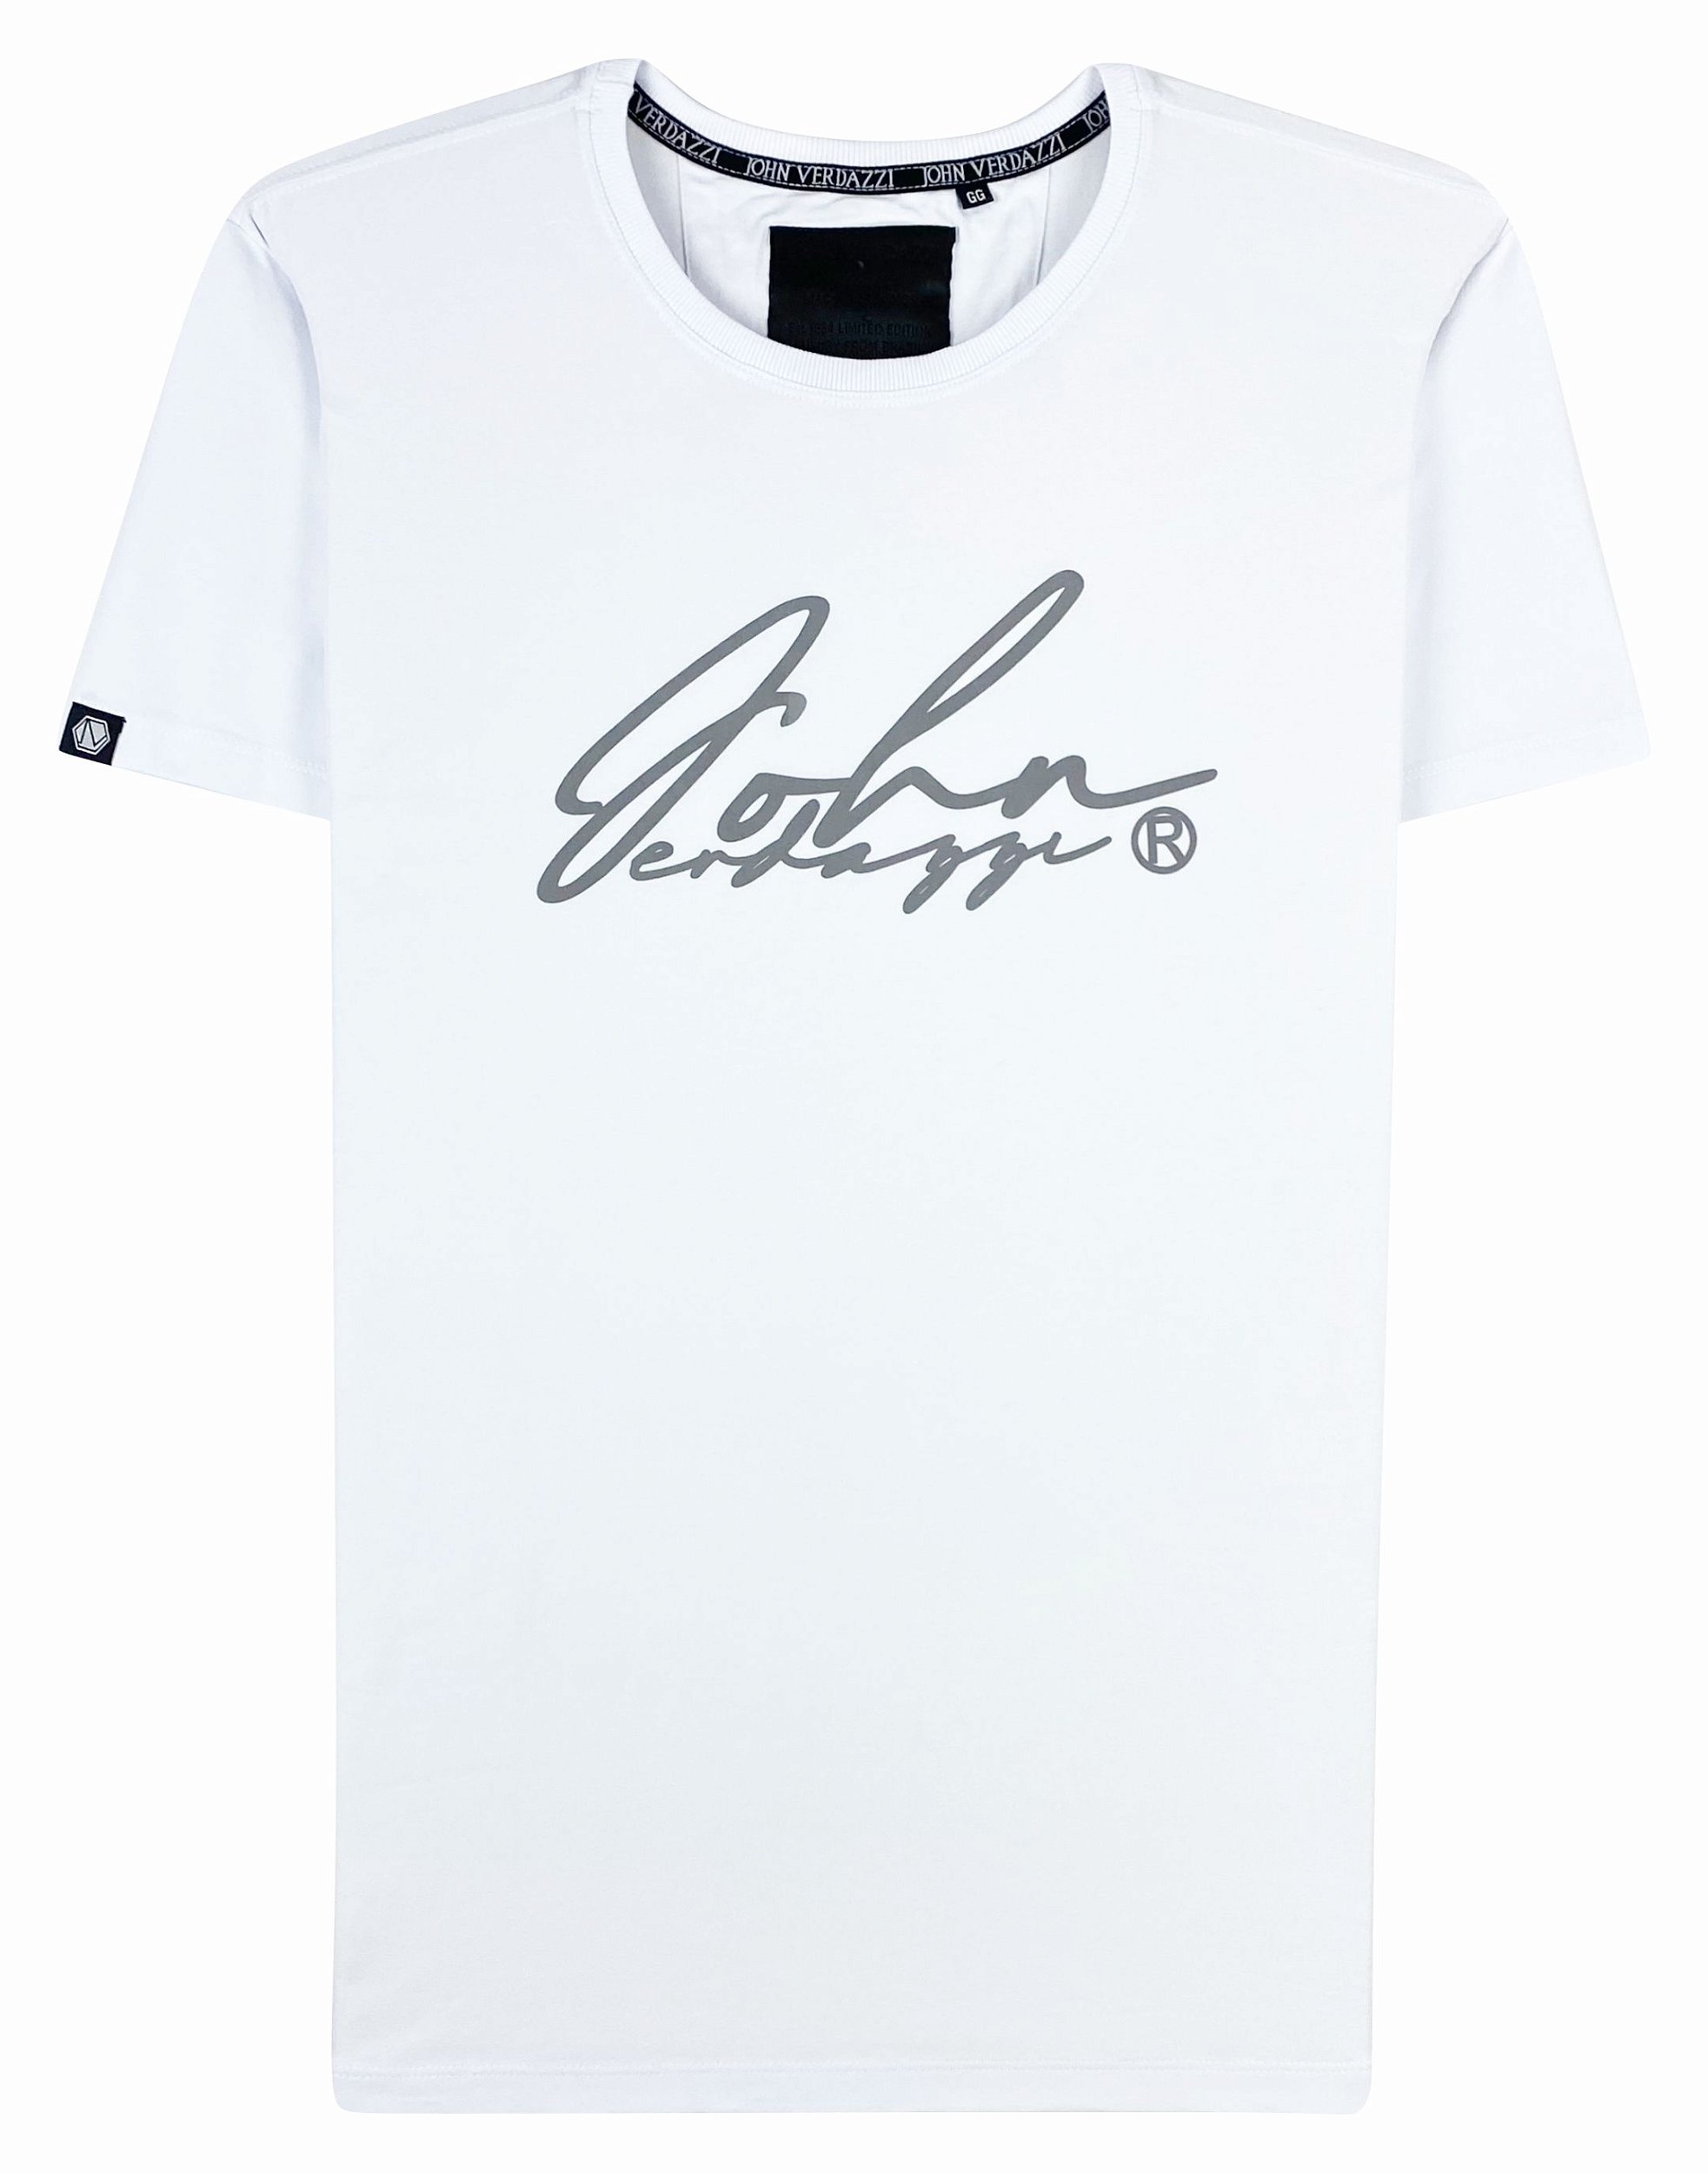 Camiseta masculina premium branca logo espirrado branco - JOHN VERDAZZI:  The Ultimate Fashion Luxury E-Shop - Site Oficial